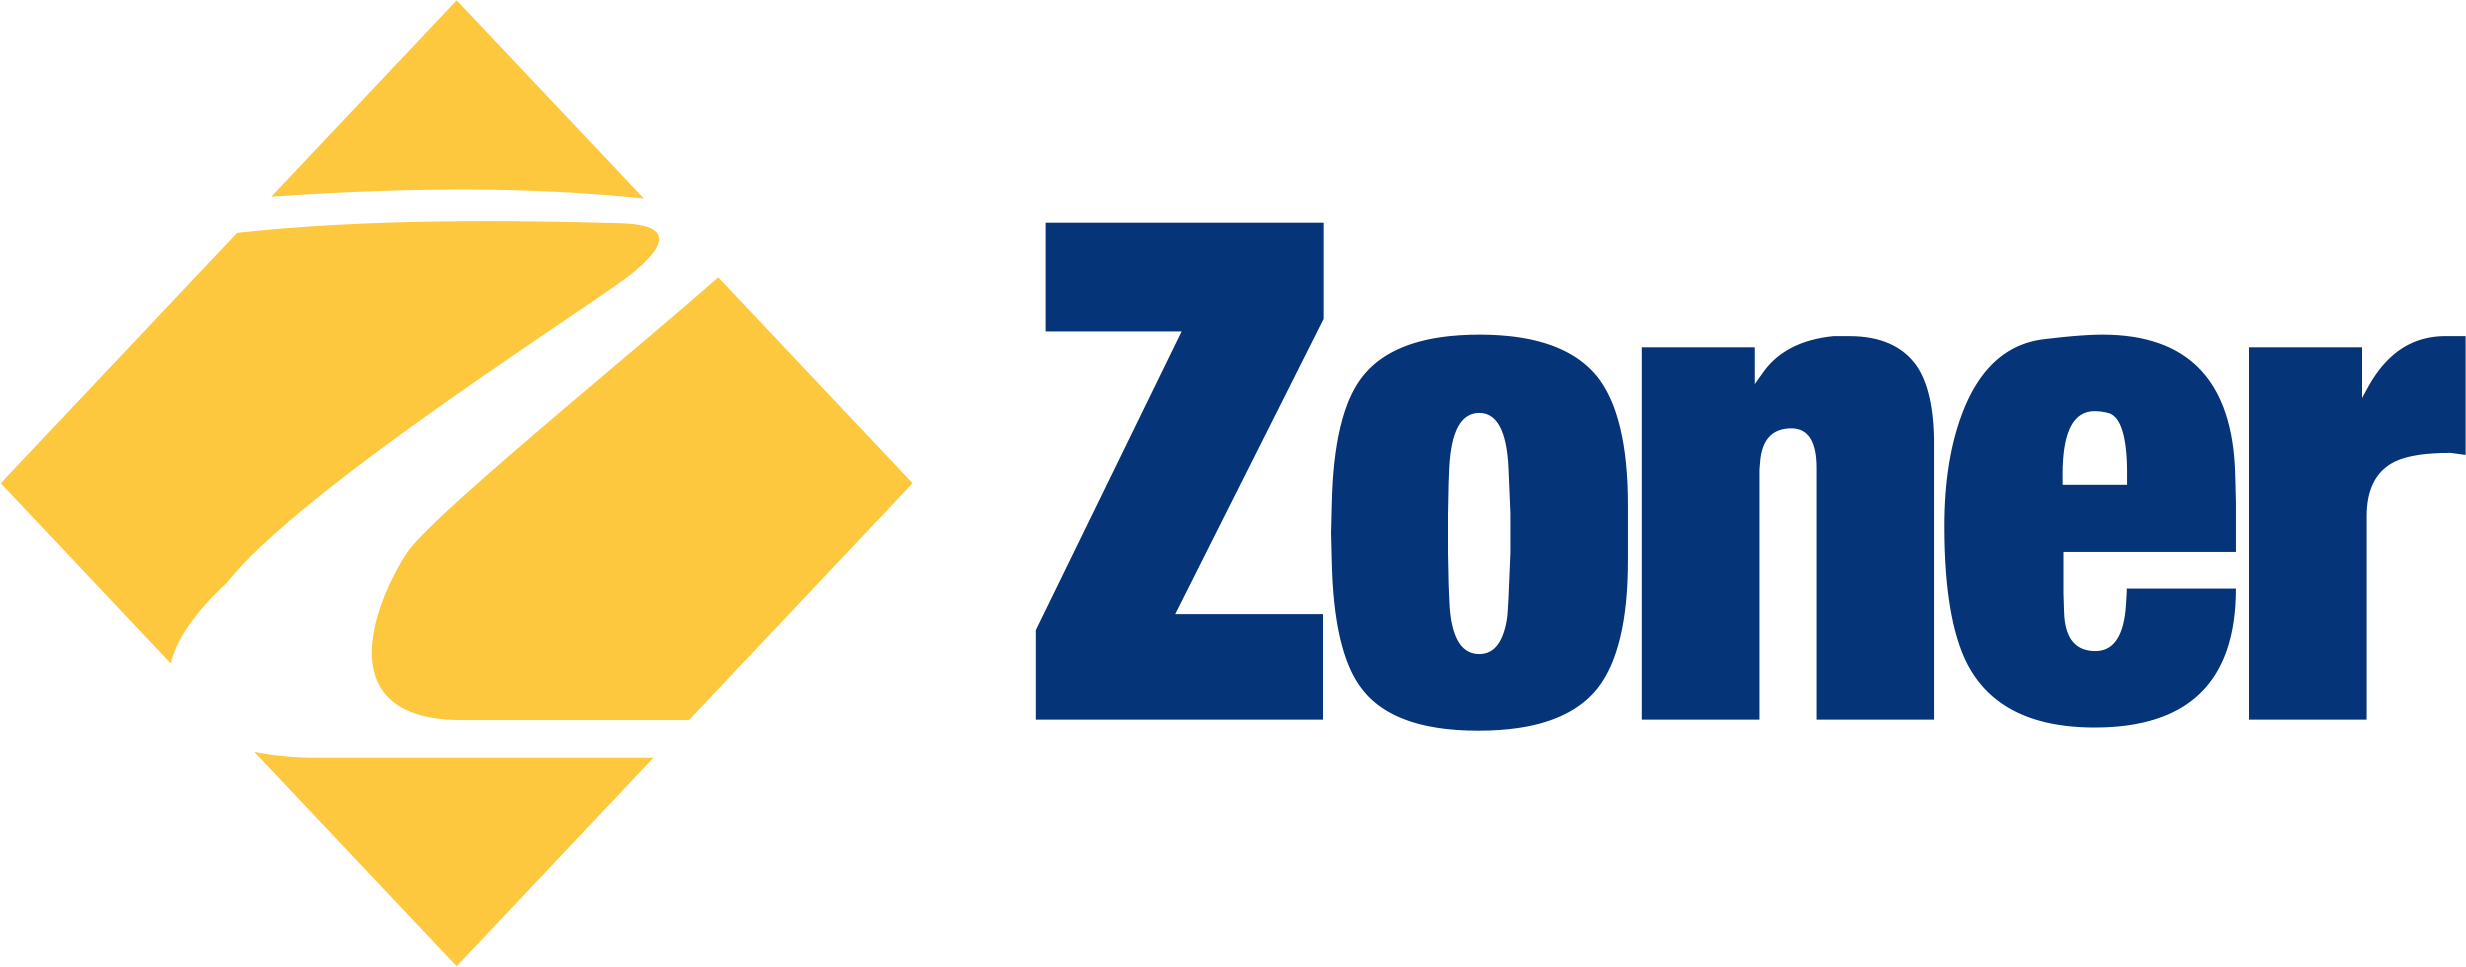 ZONER a.s. Corporate website